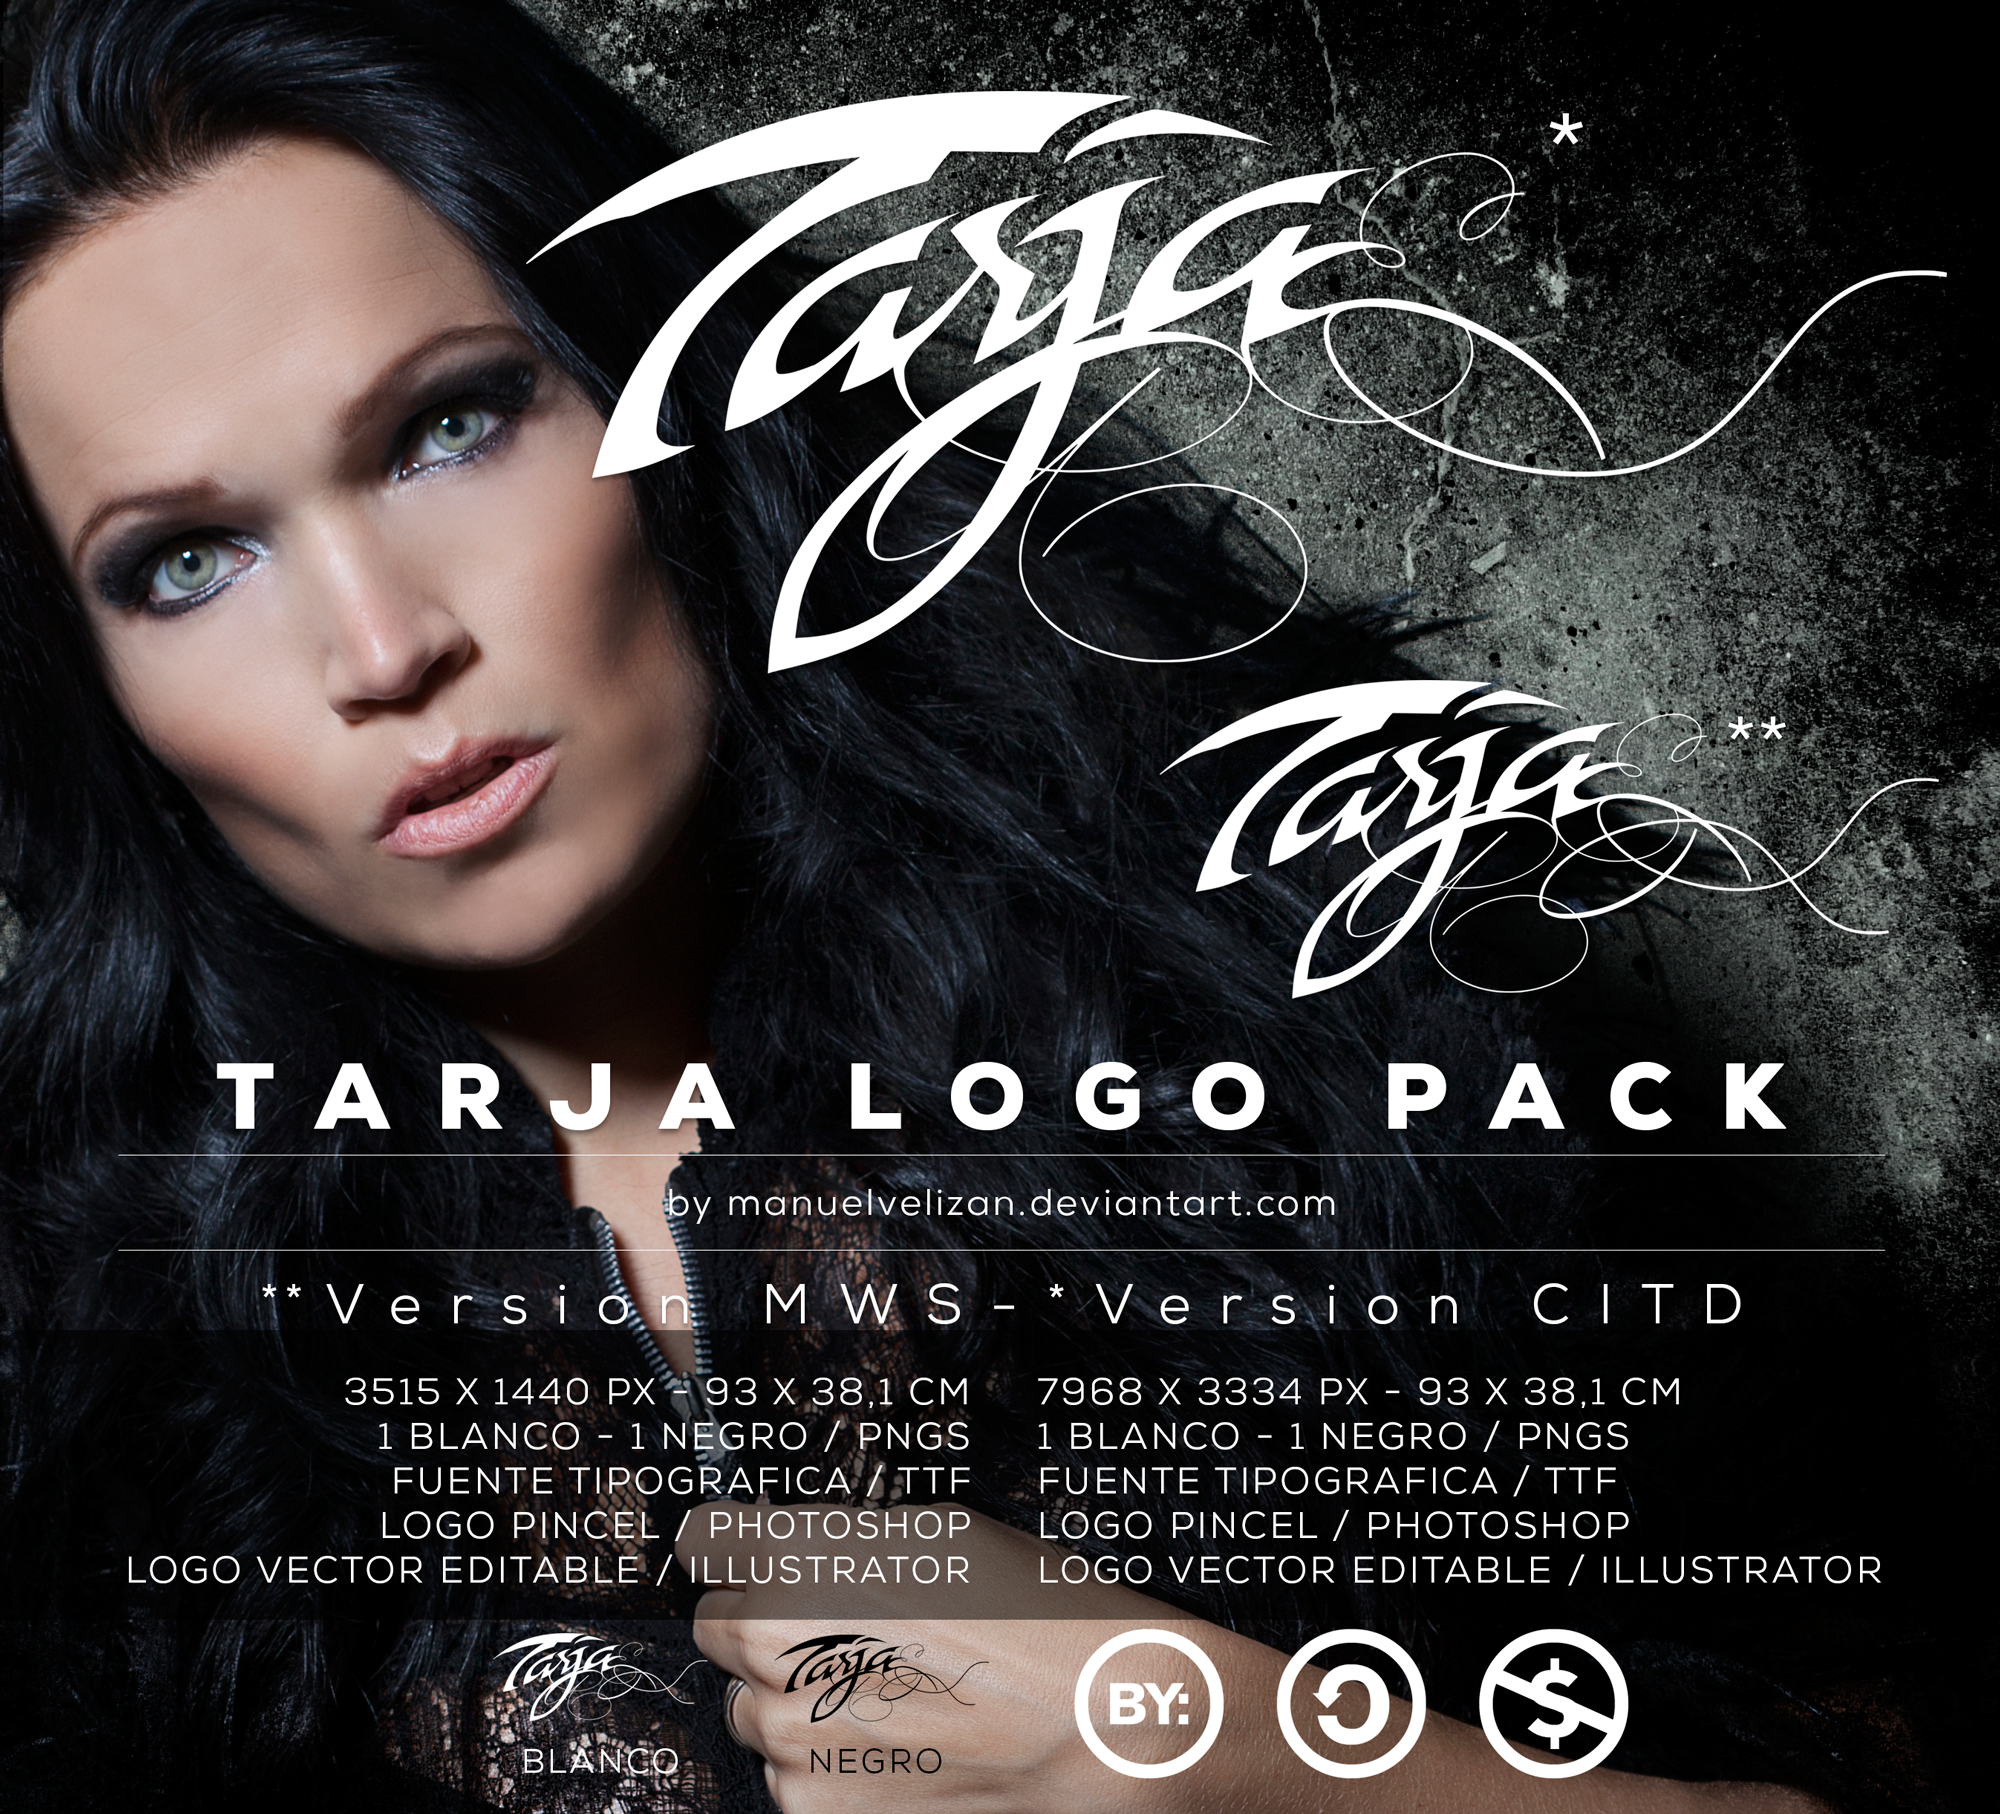 tarja-logo-pack-free-download-by-manuelvelizan-on-deviantart